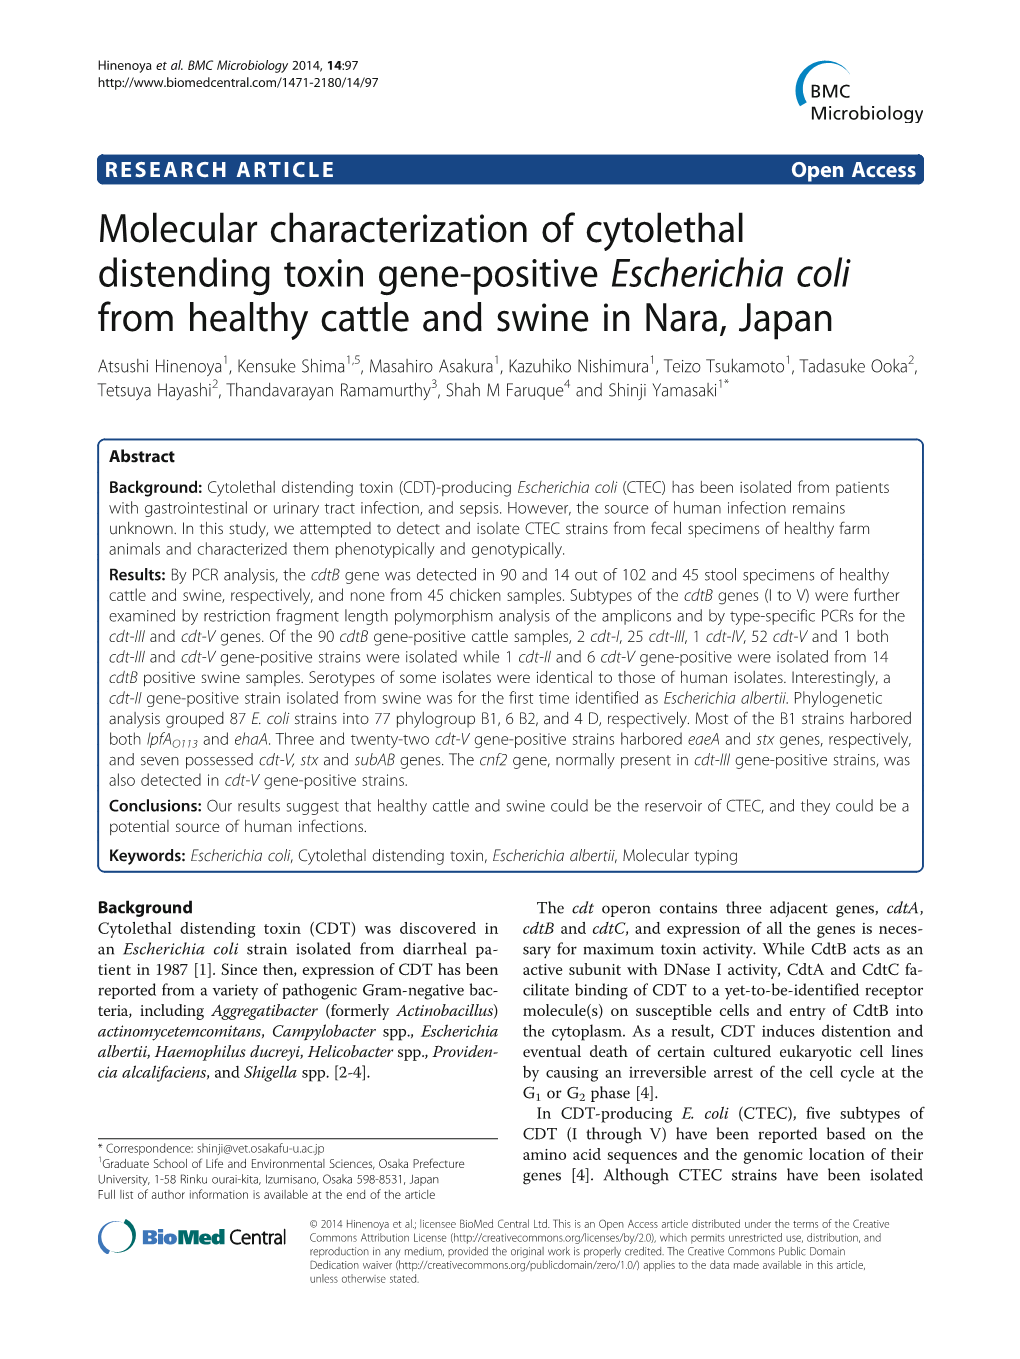 Molecular Characterization of Cytolethal